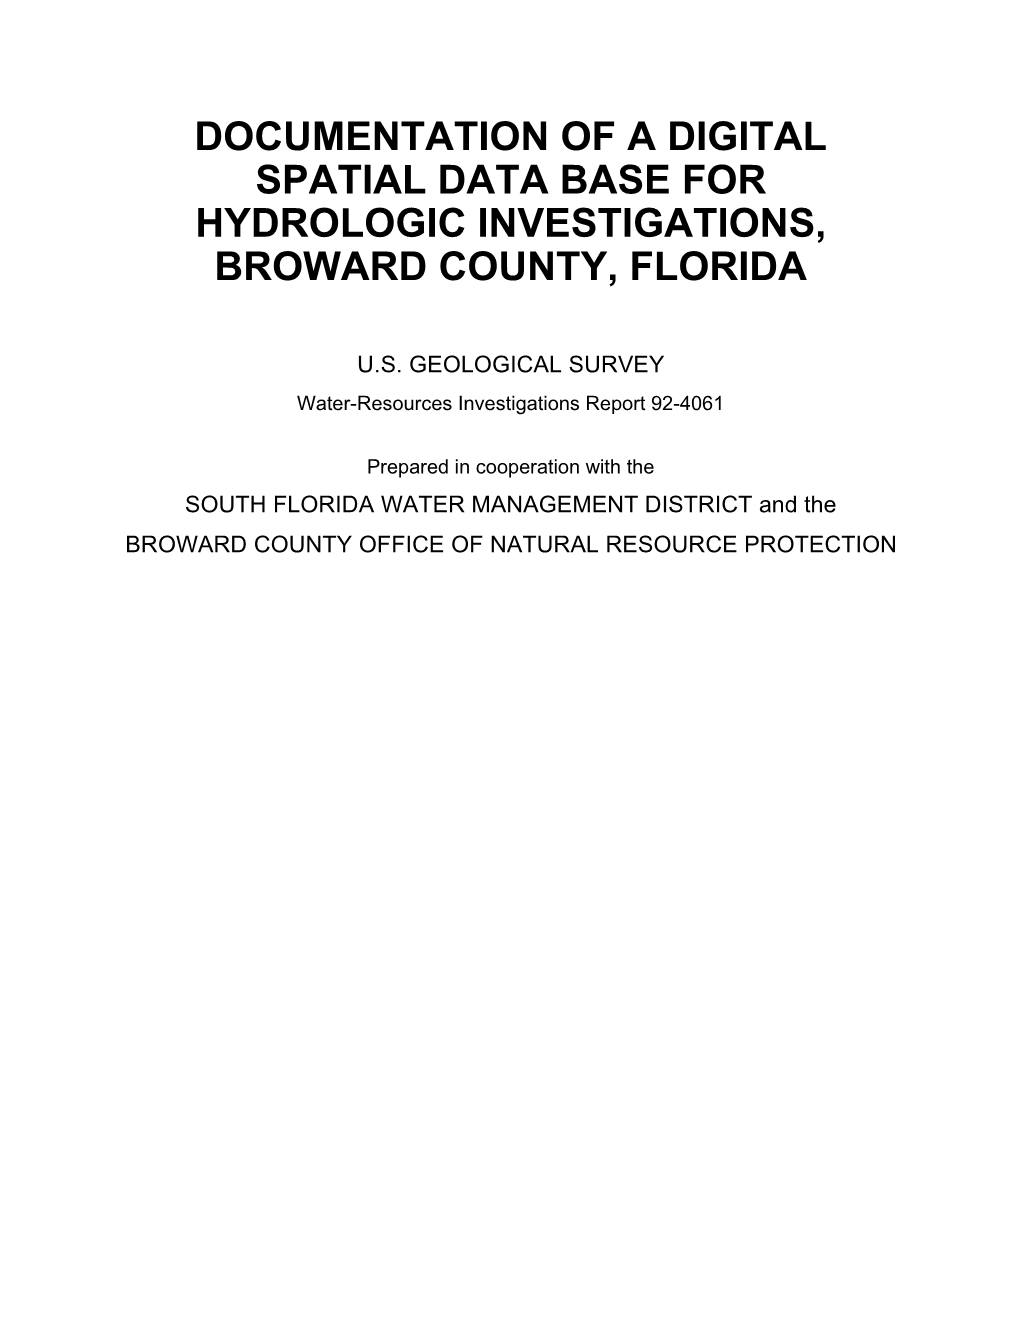 Documentation of a Digital Spatial Data Base for Hydrologic Investigations, Broward County, Florida